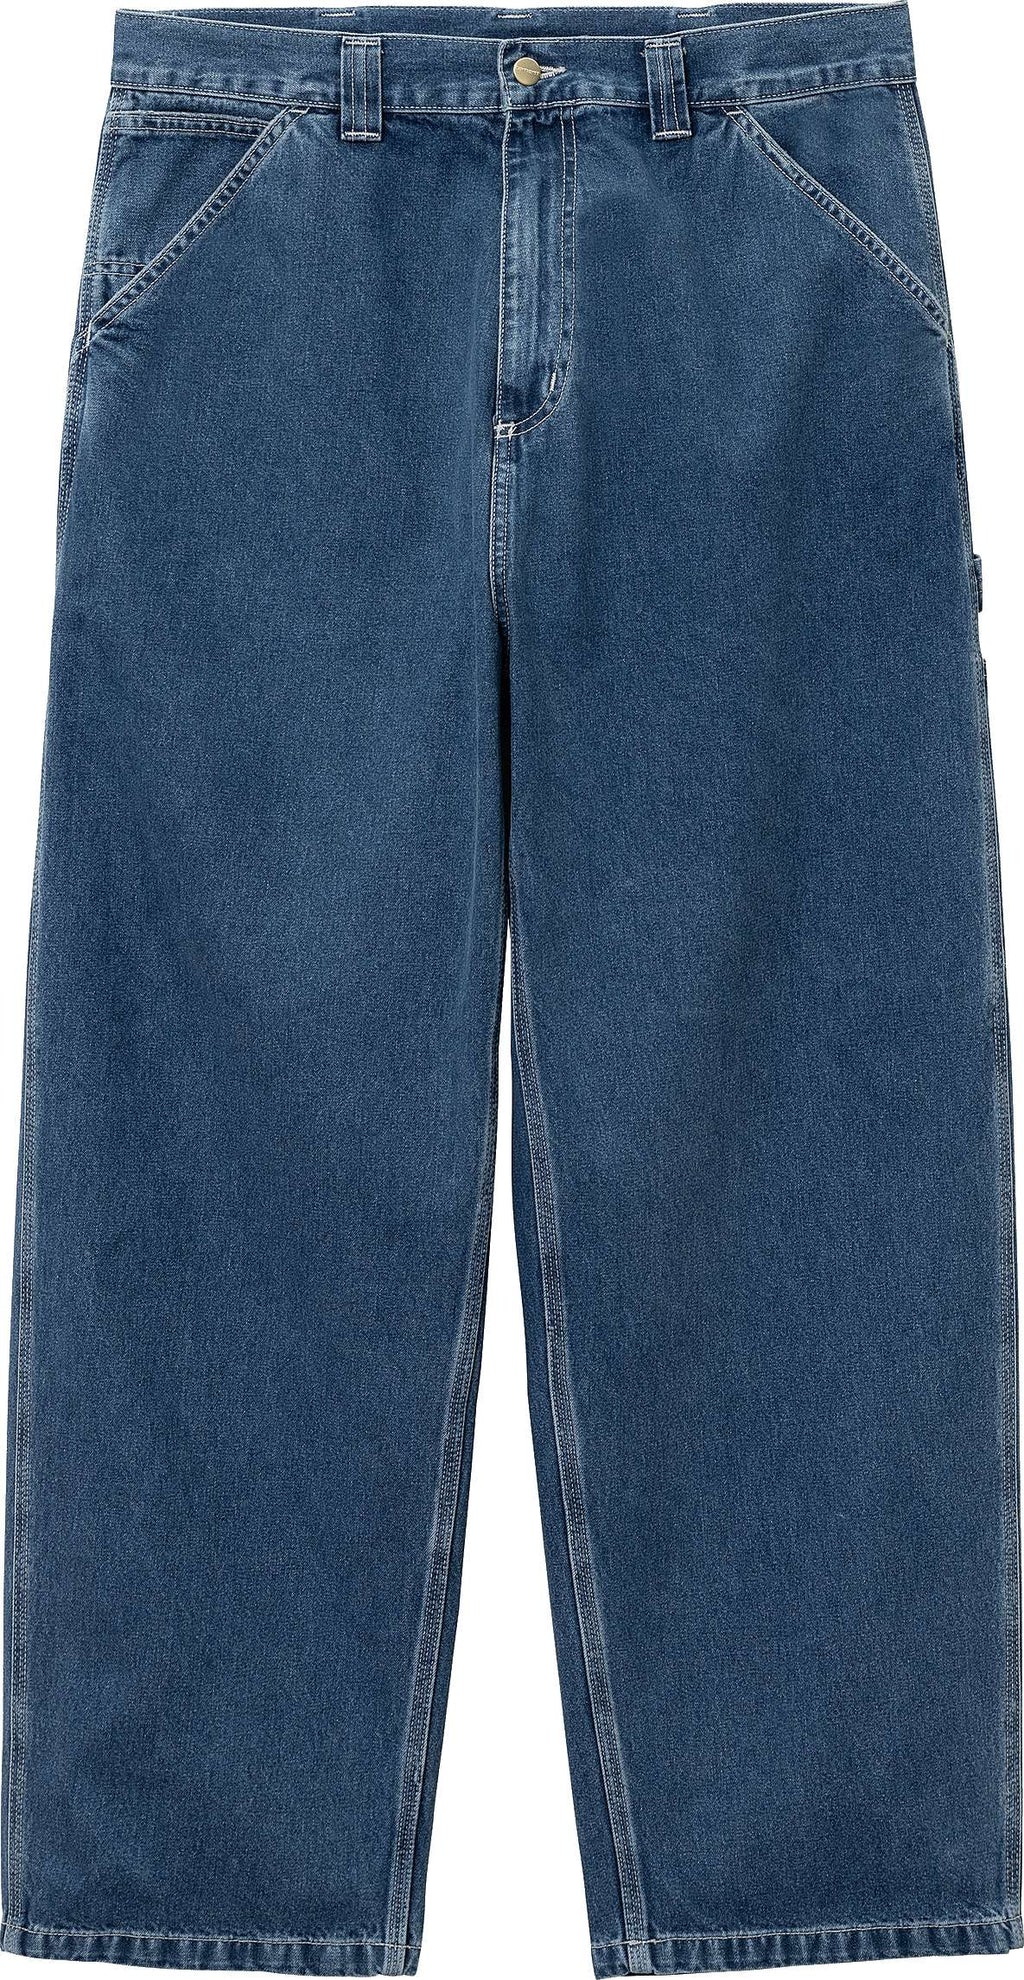  Carhartt Wip Jeans Og Single Knee Pant Blue Stone Washed Uomo - 2